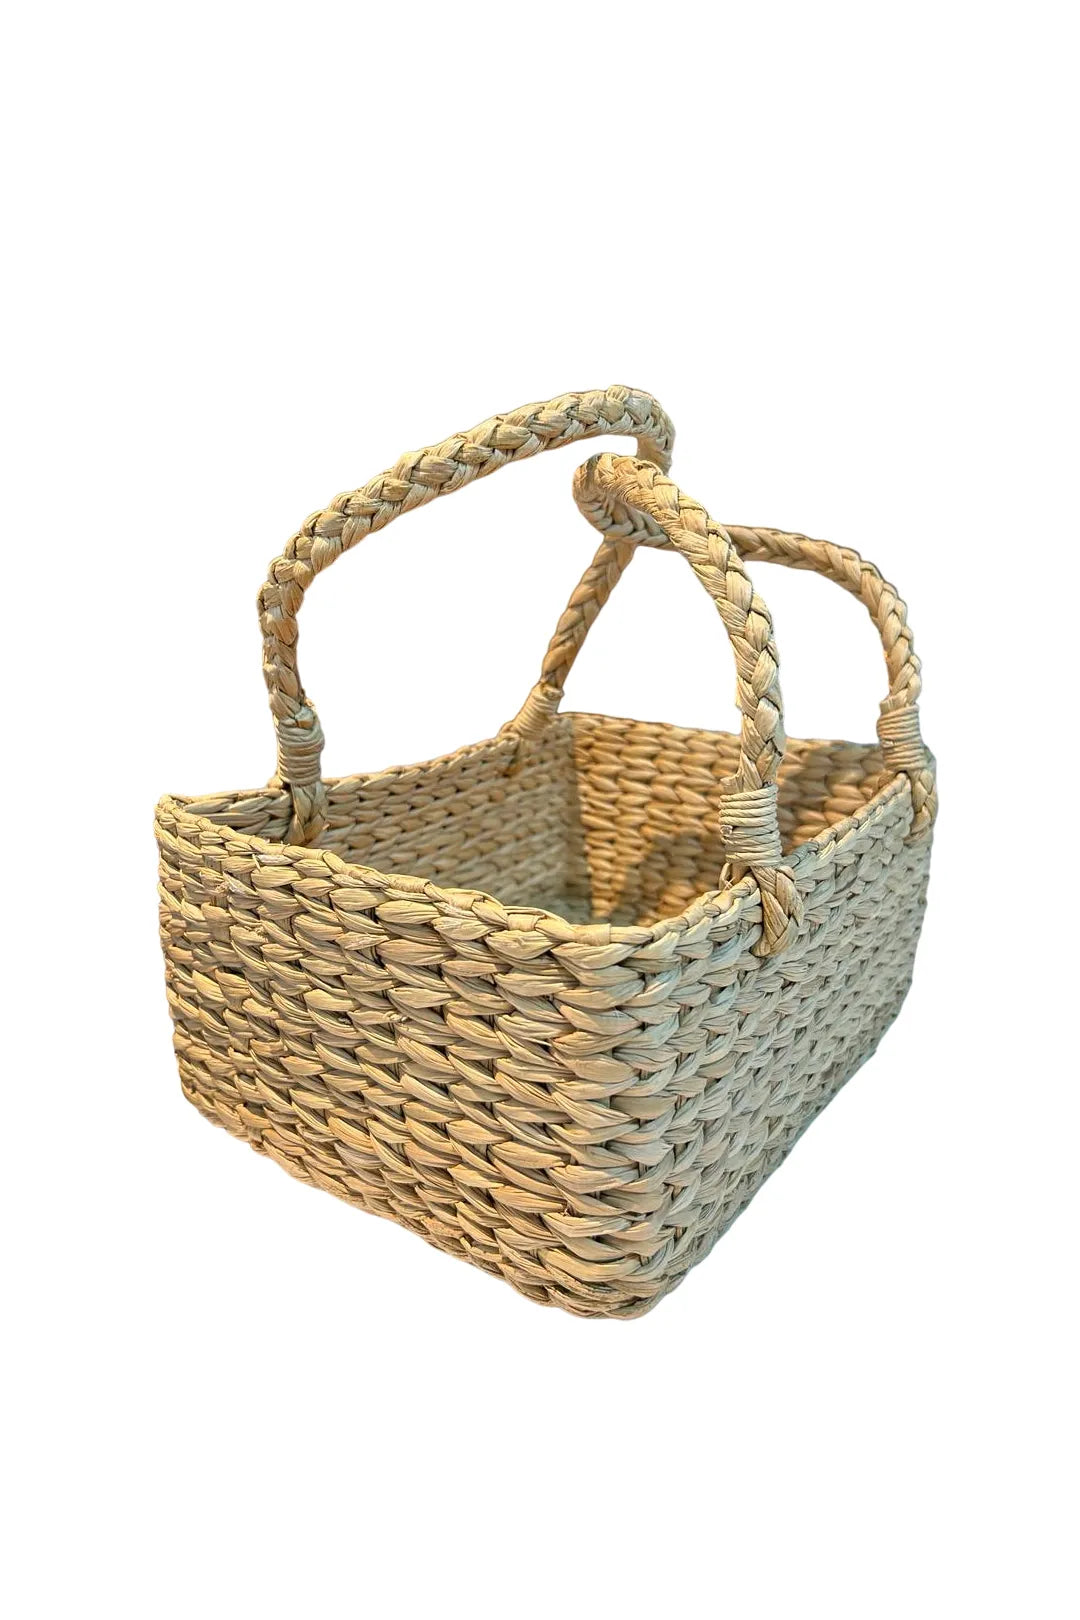 Paddy Straw Gifting Baskets